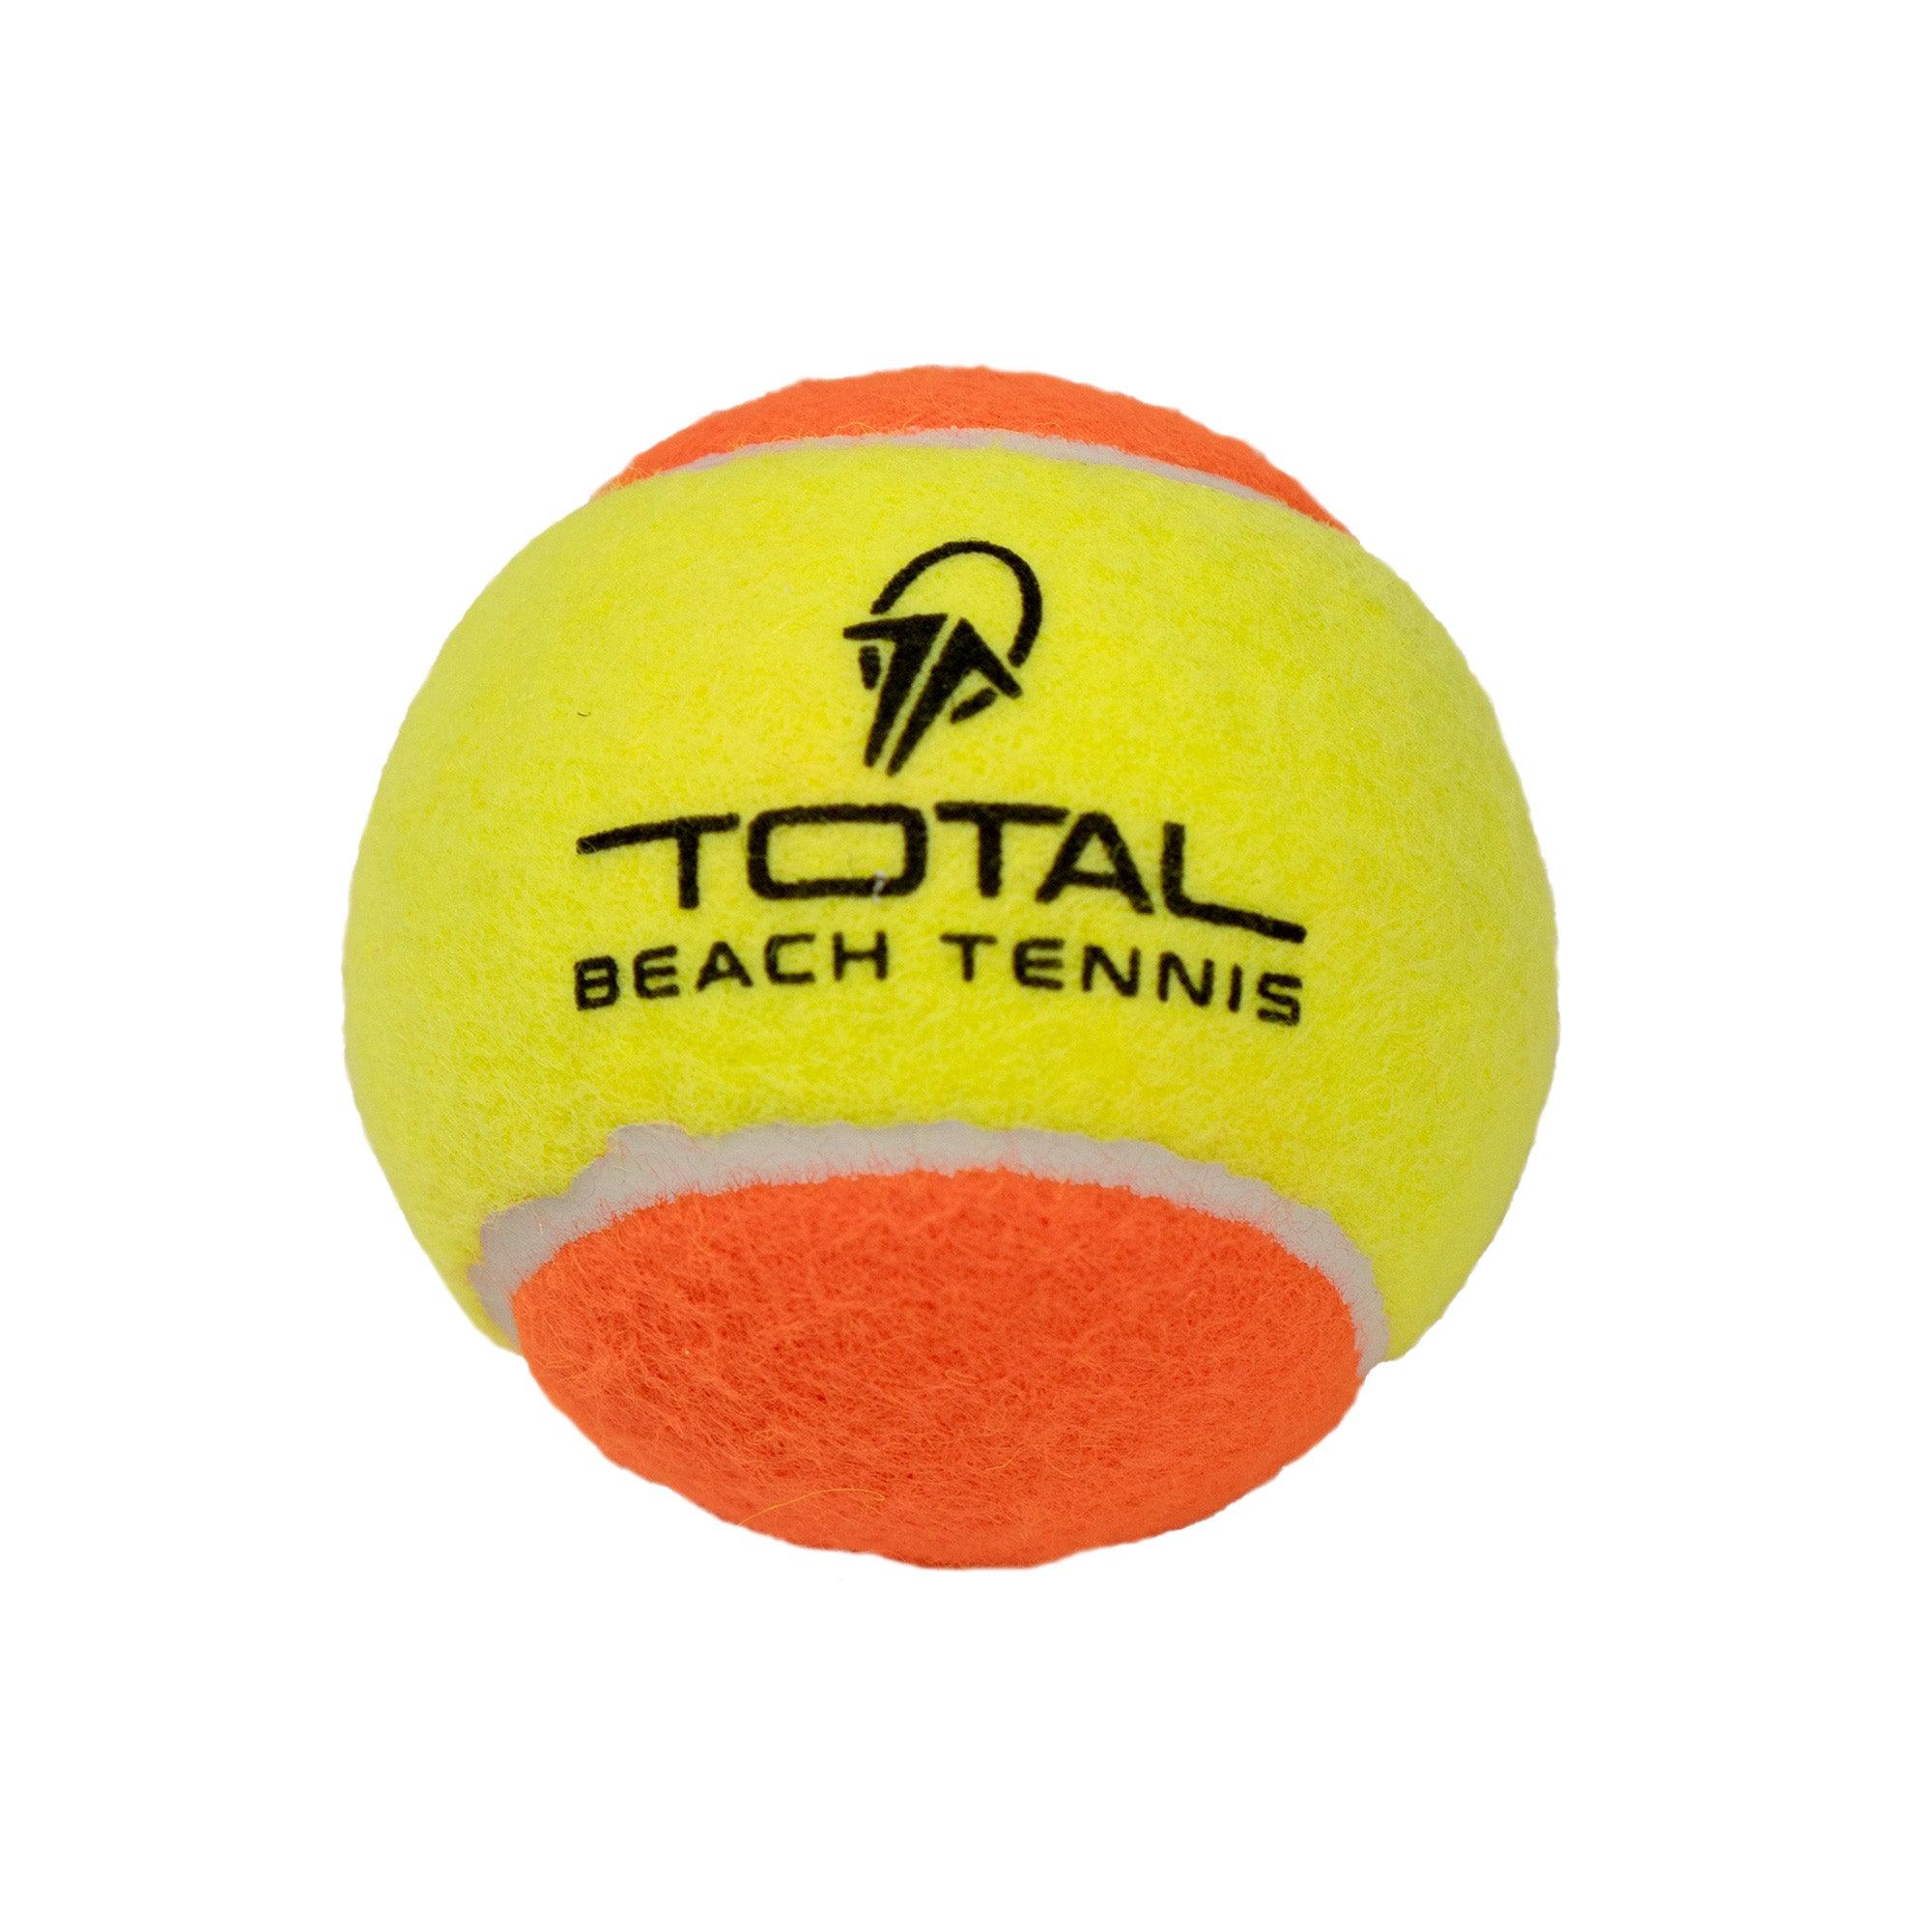 Bola de Beach Tennis TBT ITF Approved - 12 Unidades - Total Beach Tennis